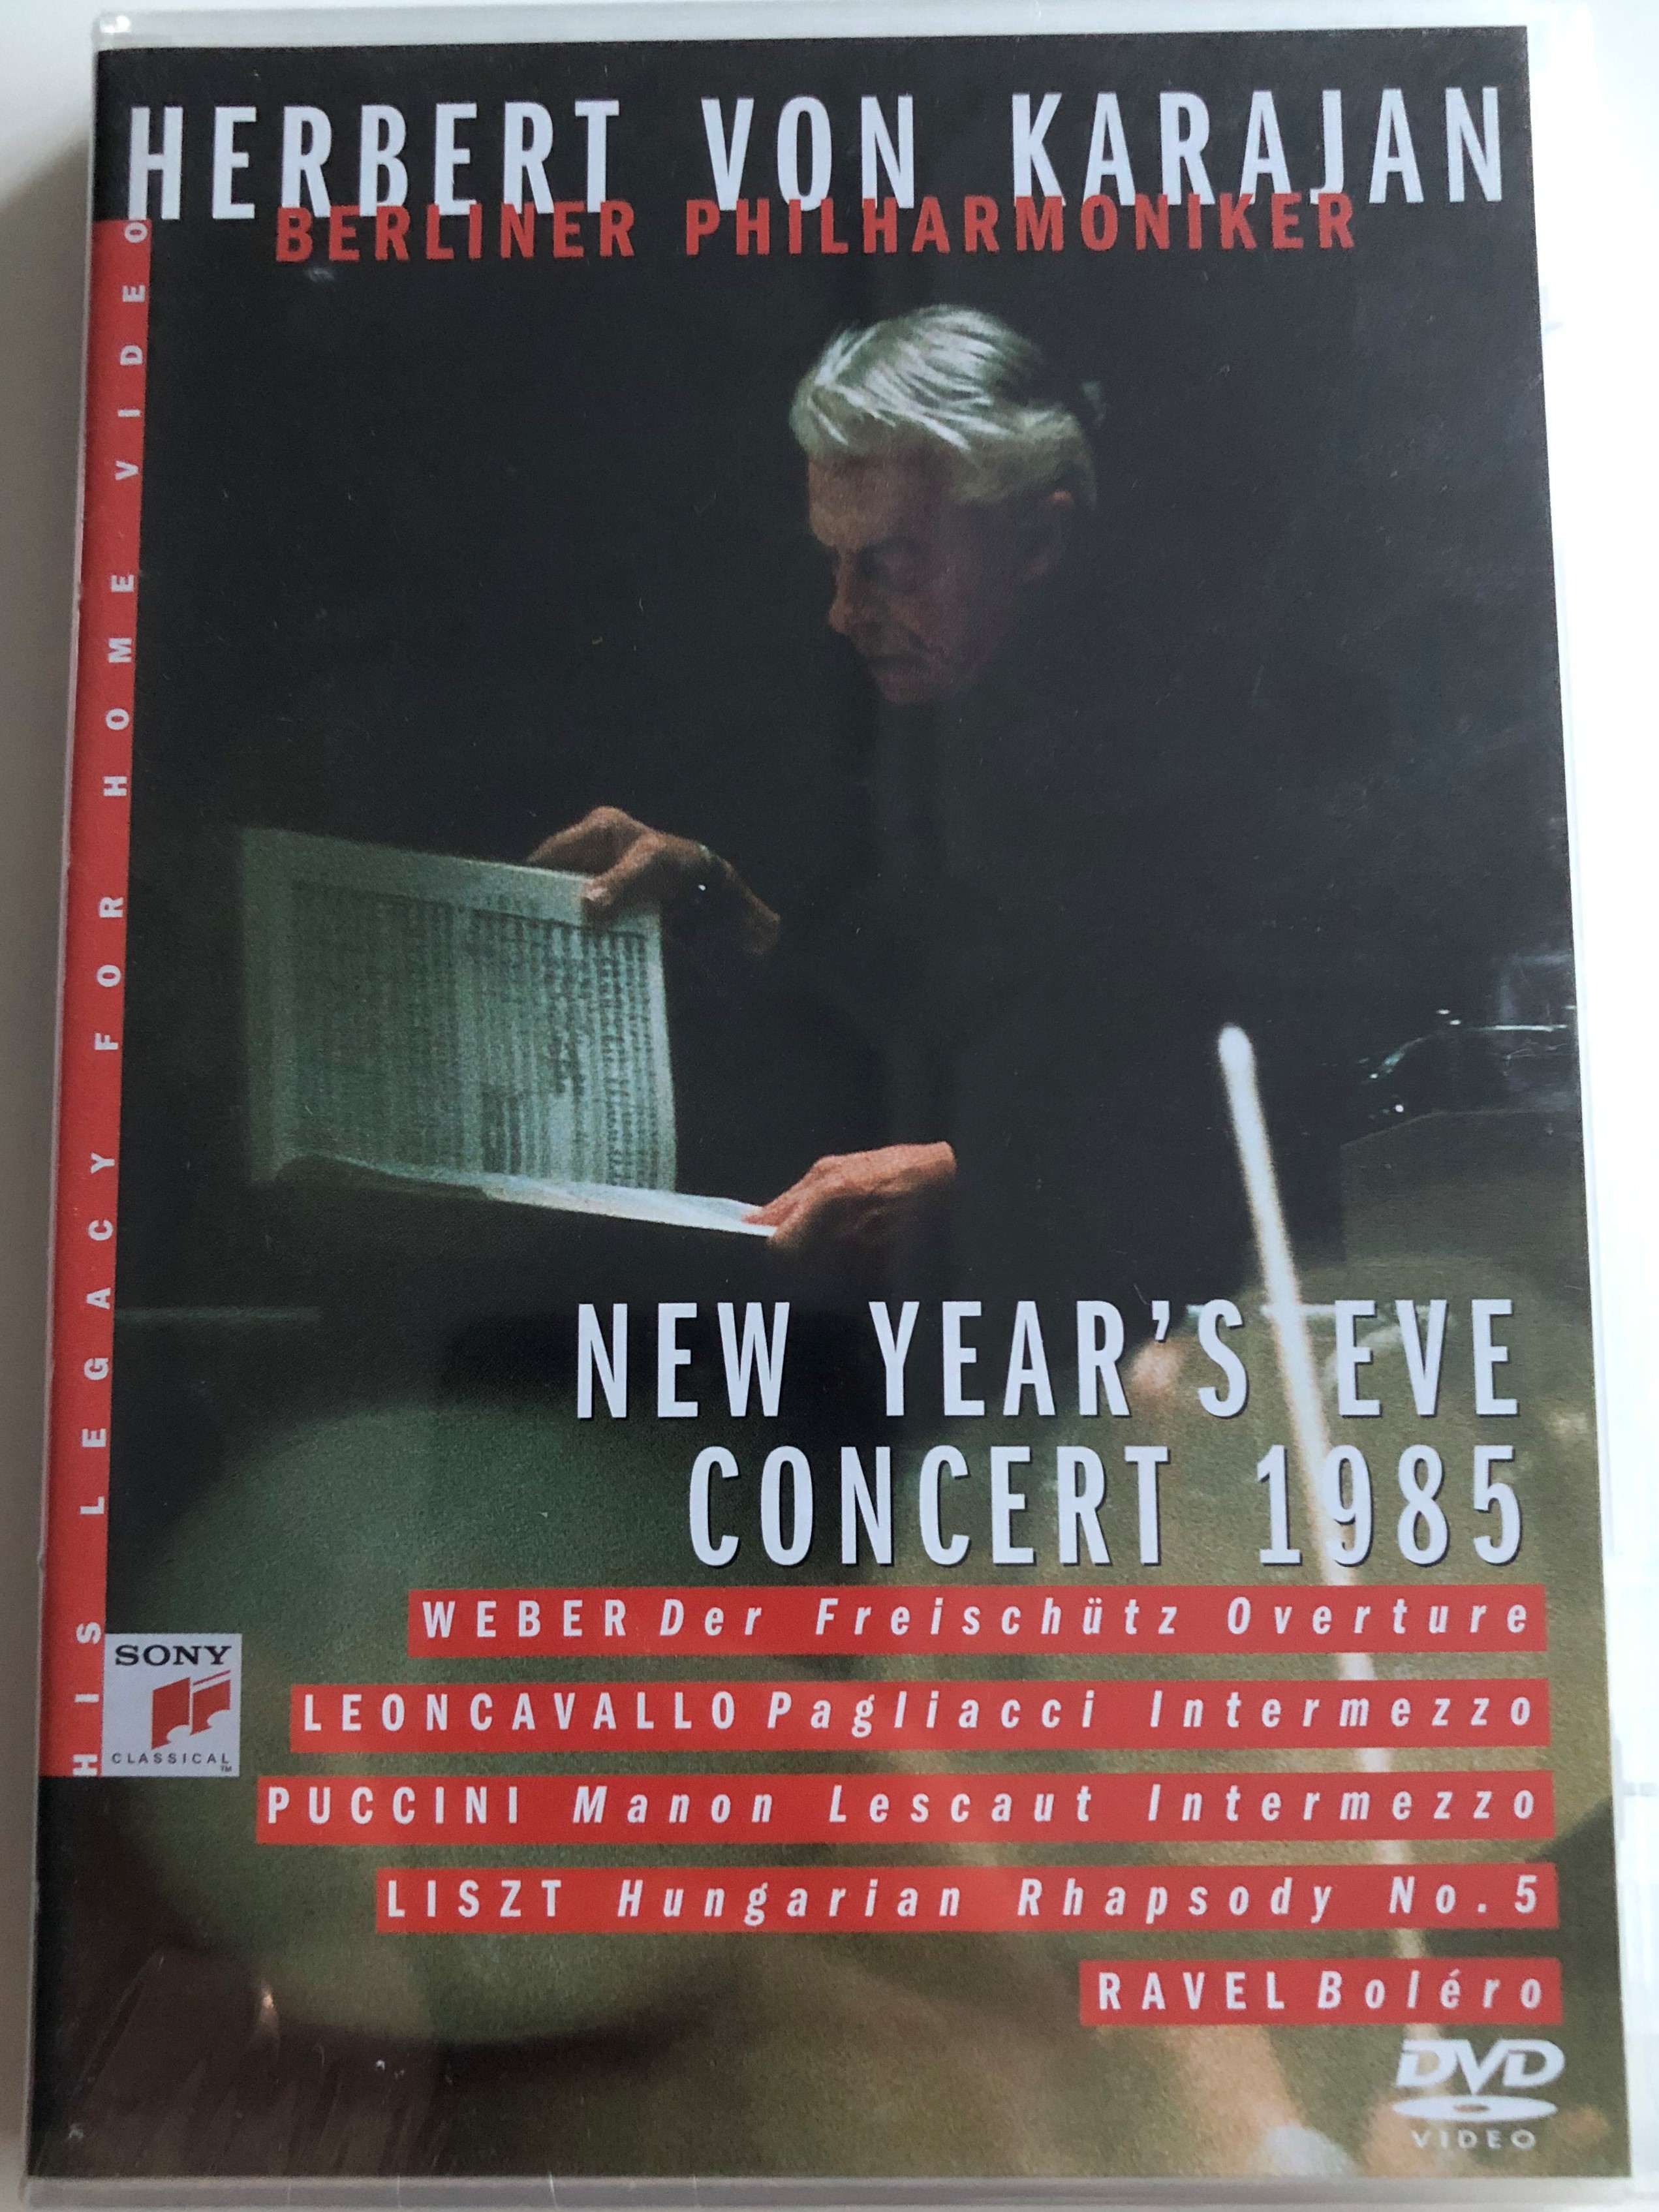 herbert-von-karajan-new-year-s-eve-concert-dvd-1985-berliner-philharmoniker-weber-leoncavallo-puccini-liszt-ravel-svd-46402-1-.jpg